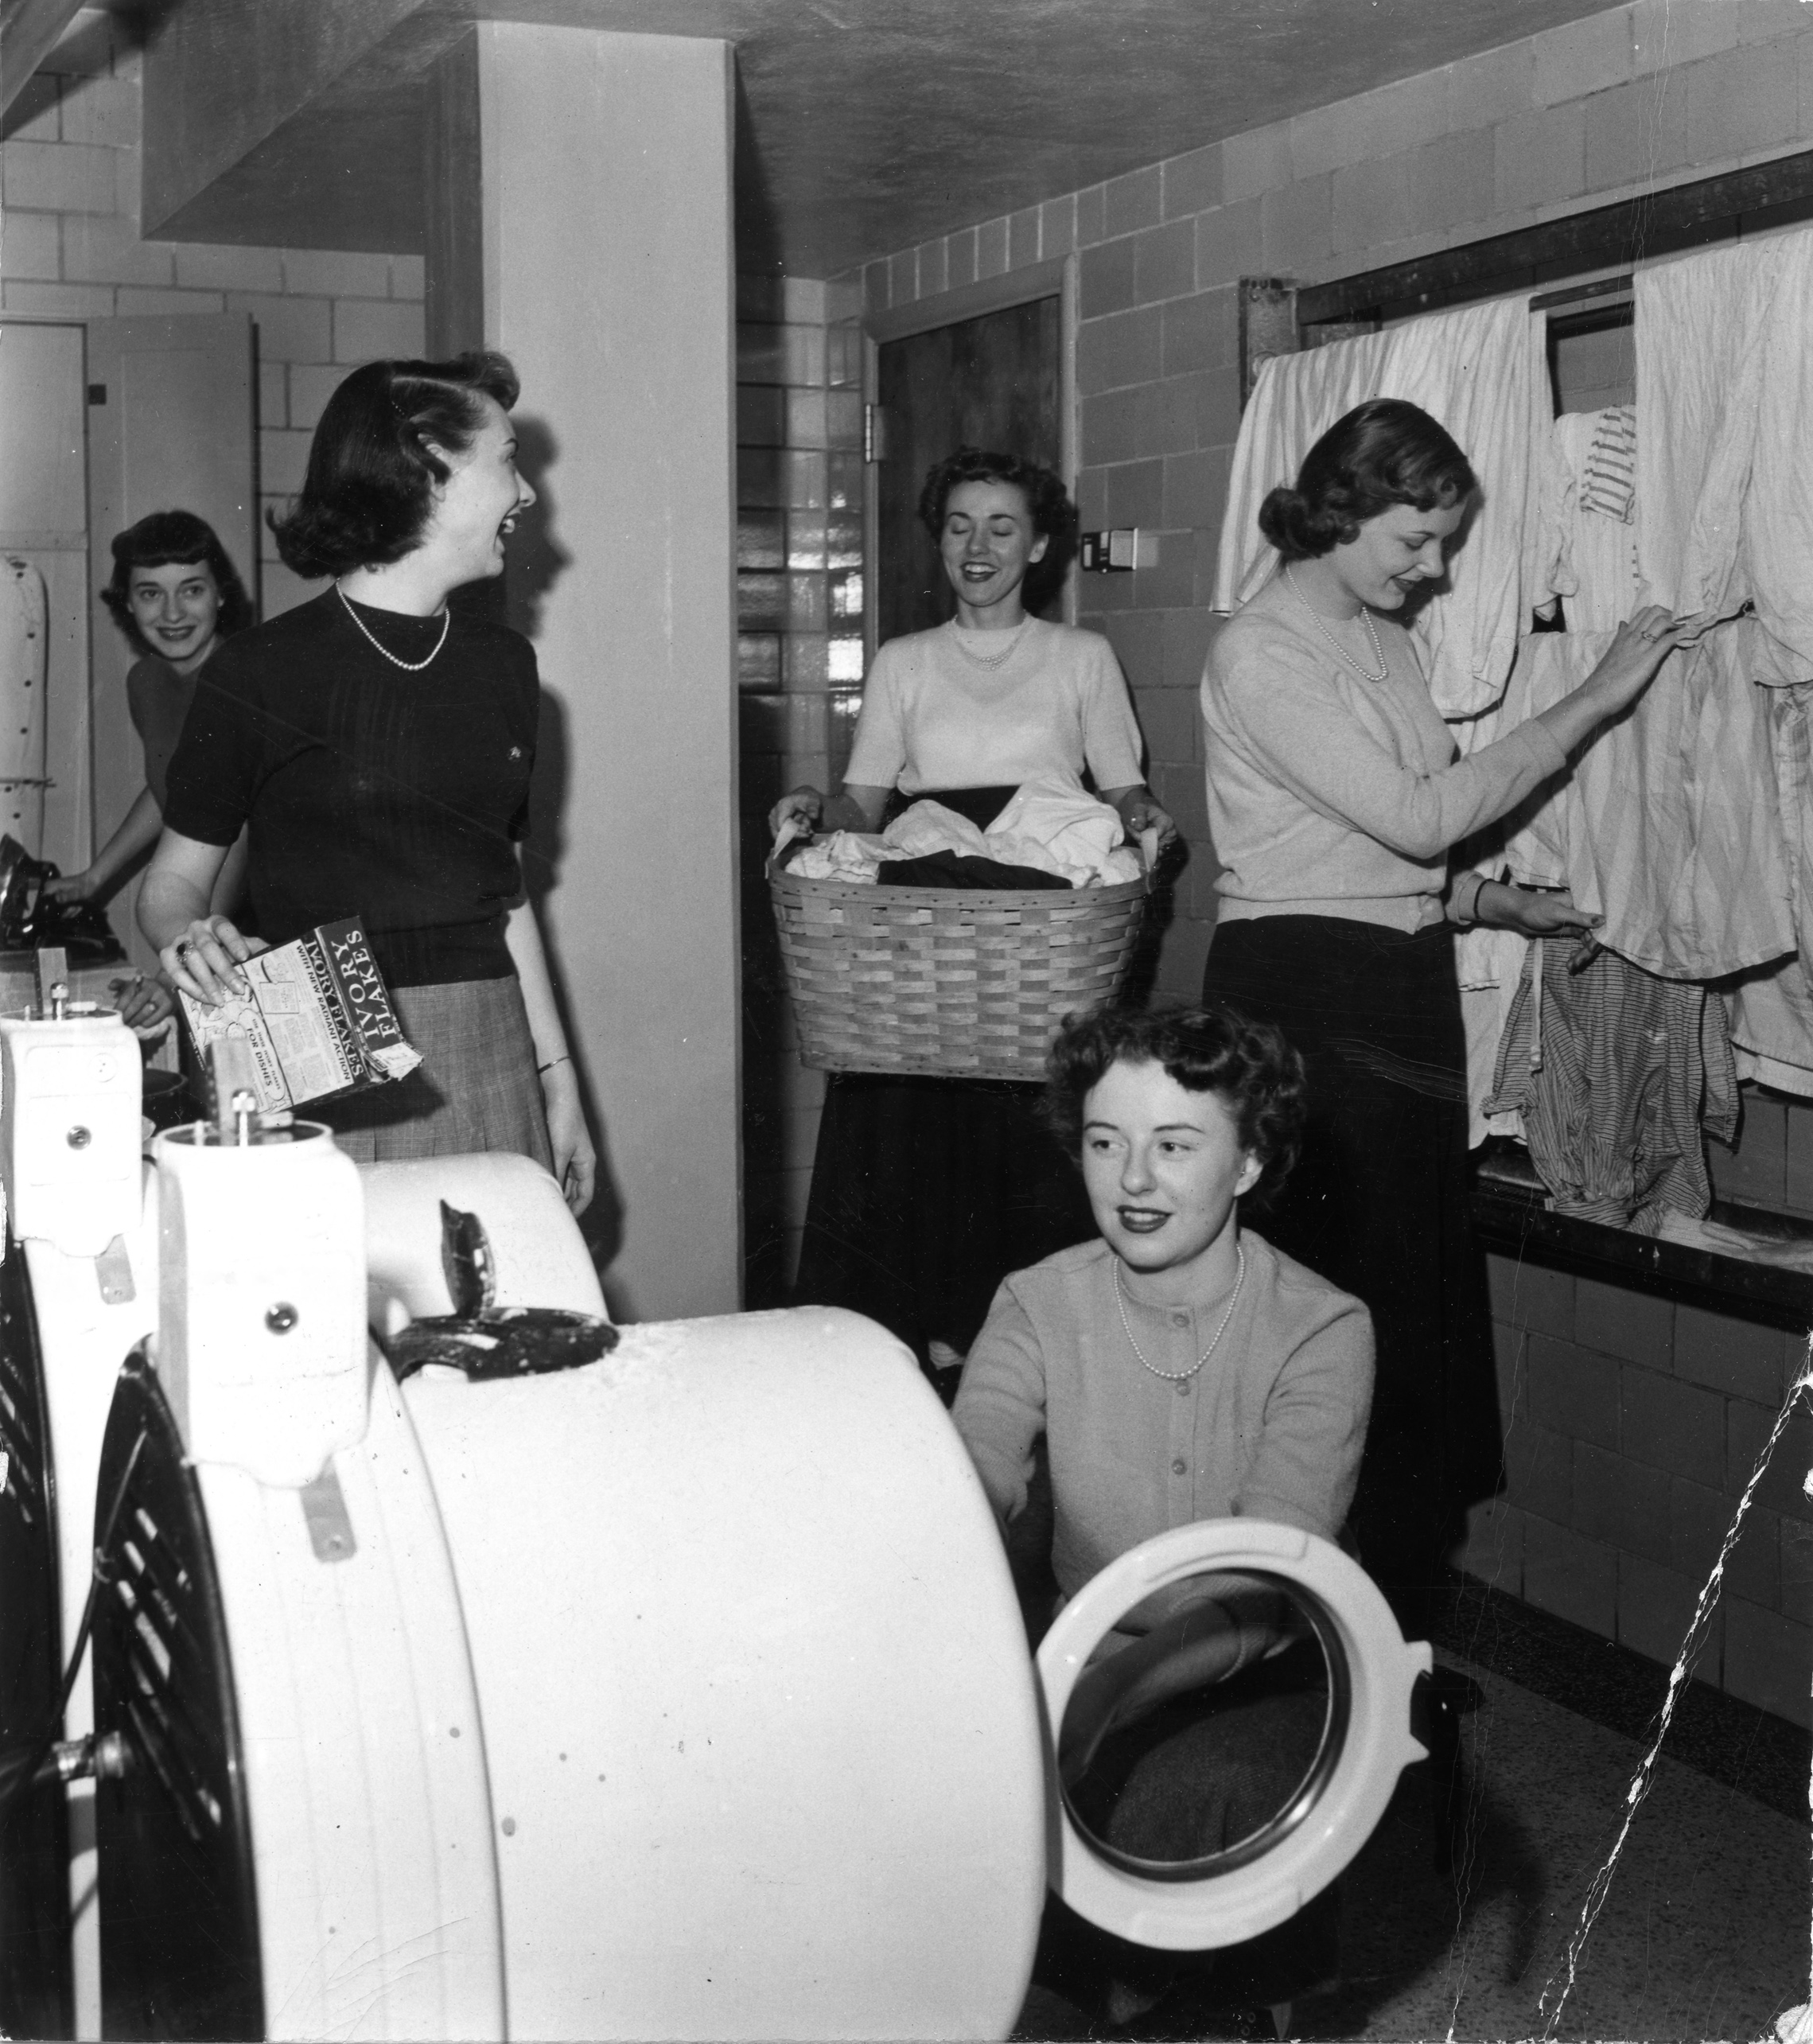 Students doing laundry, 1950